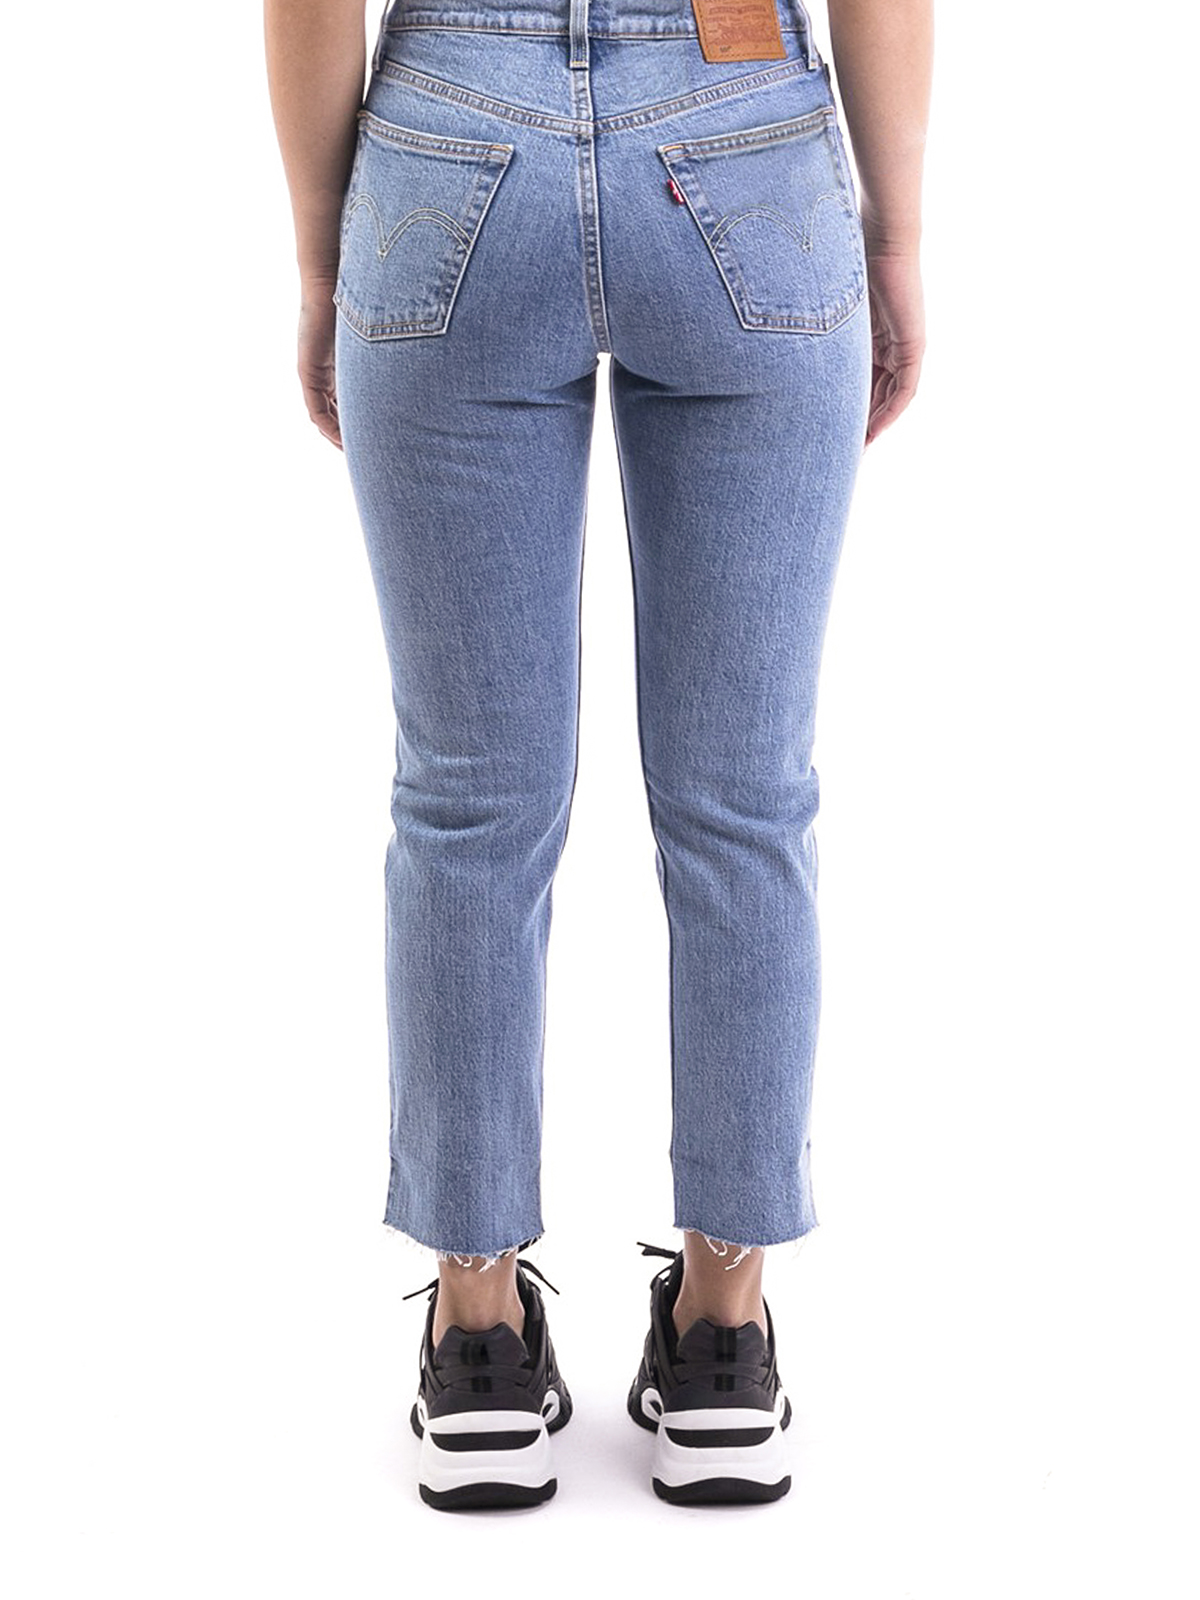 levis jeans outlet online